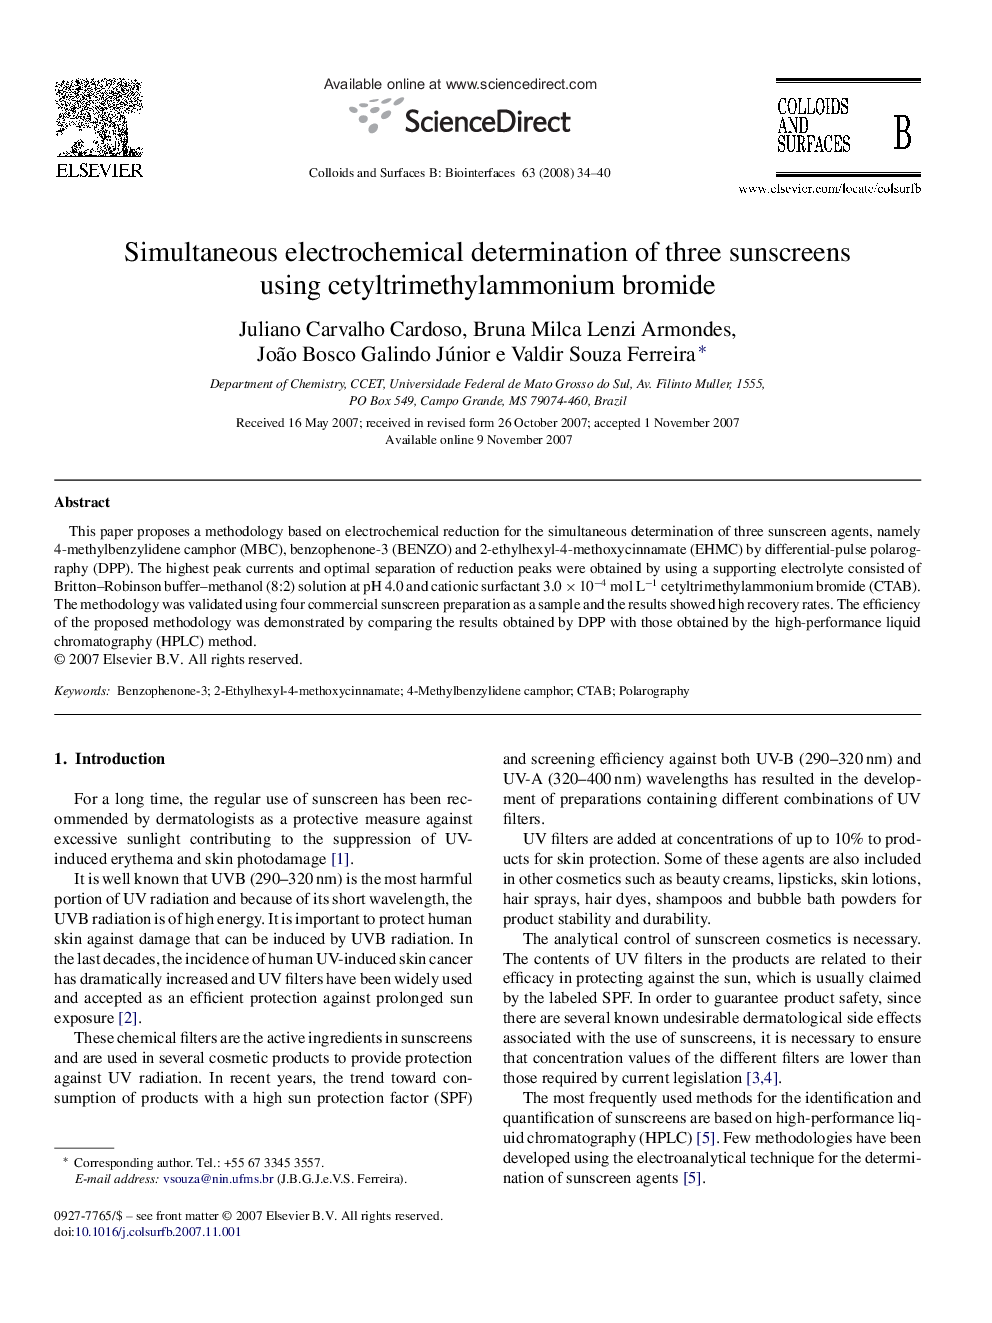 Simultaneous electrochemical determination of three sunscreens using cetyltrimethylammonium bromide